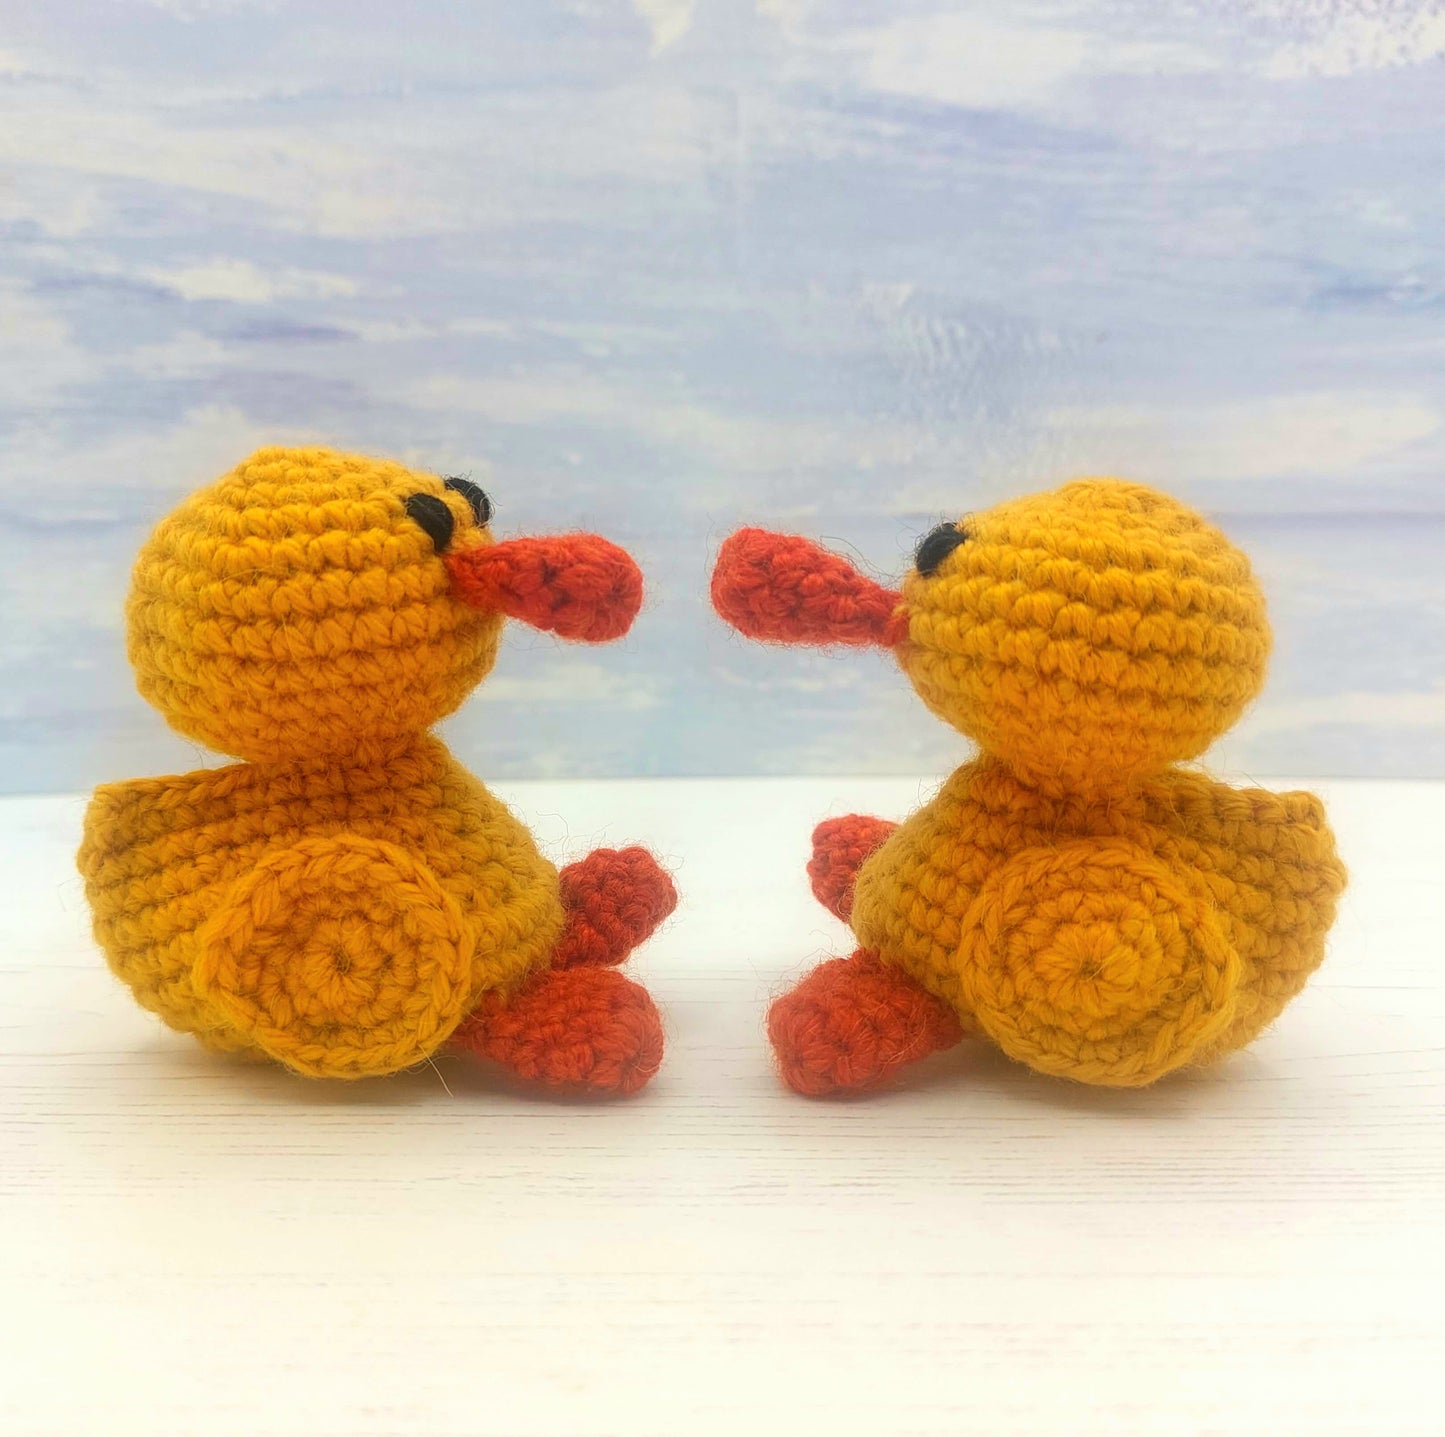 Two crochet chicks sitting opposite each other